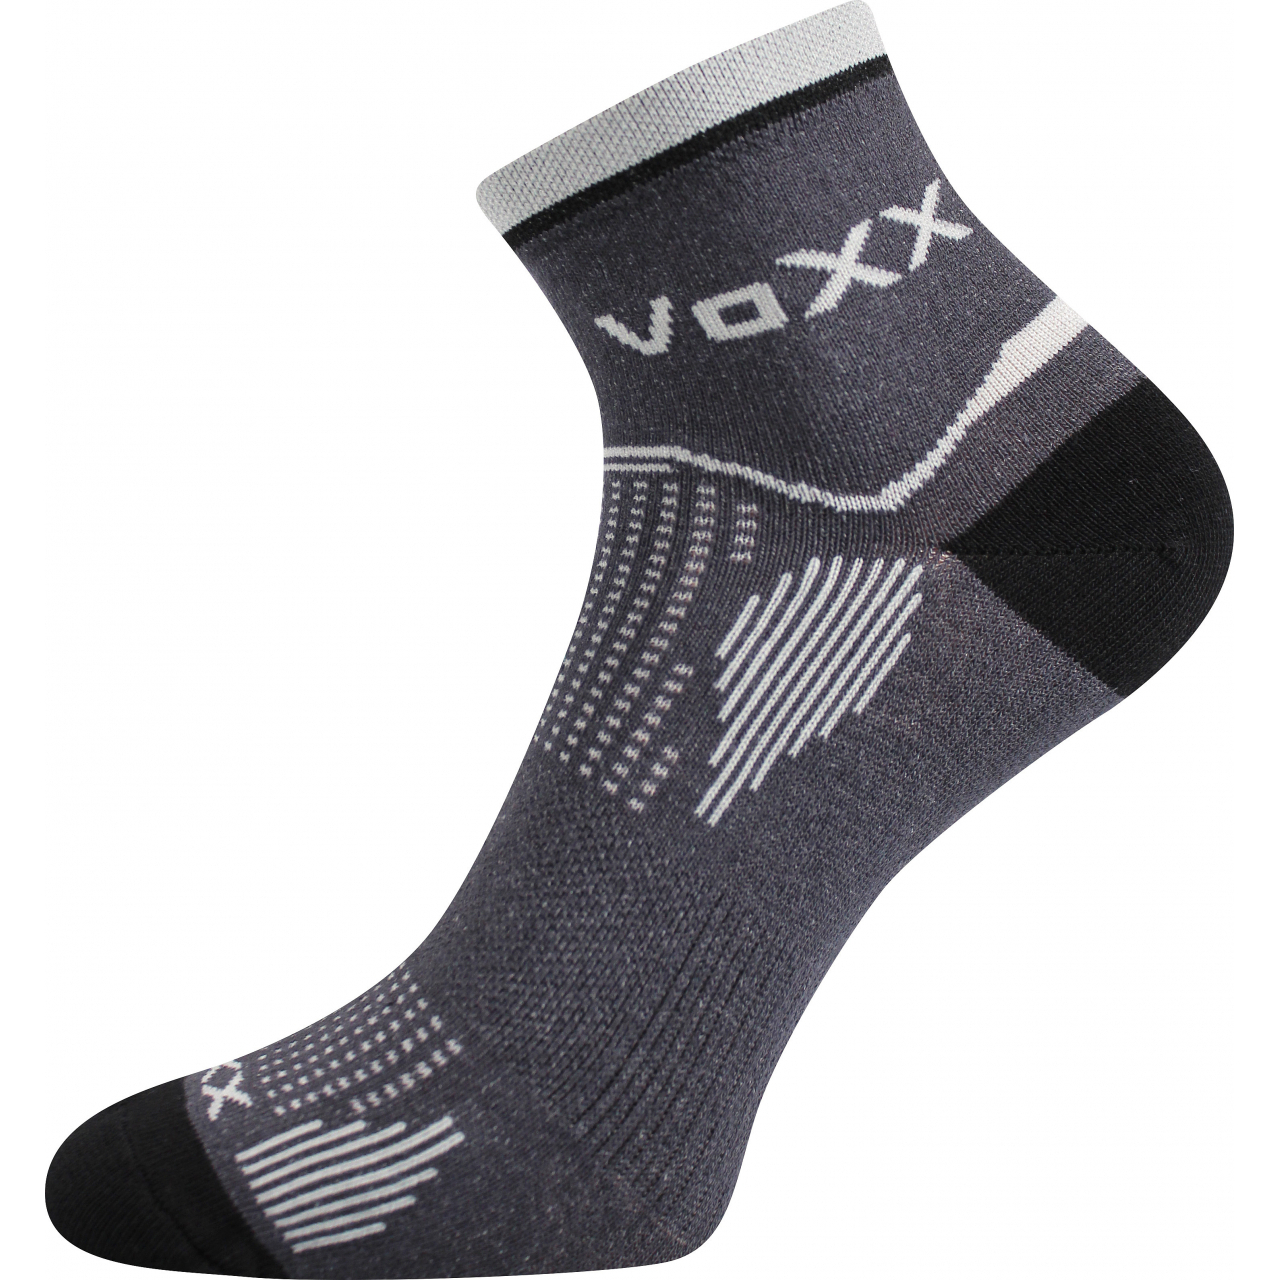 Ponožky unisex sportovní Voxx Sirius - tmavě šedé, 39-42